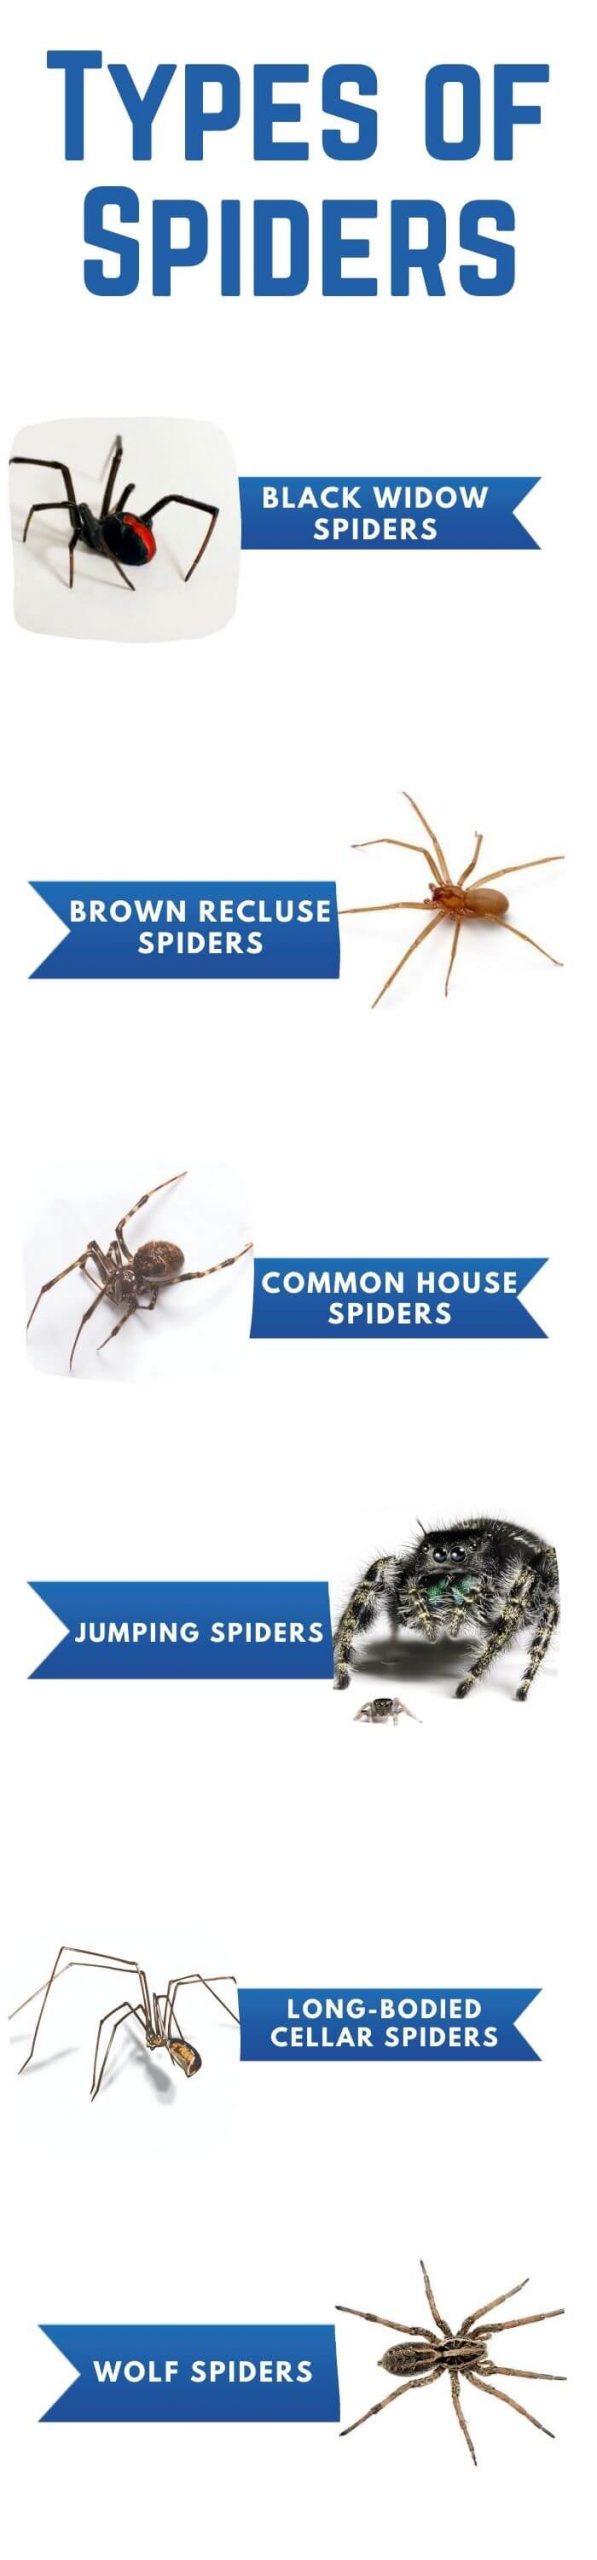 Types of spiders in Brisbane